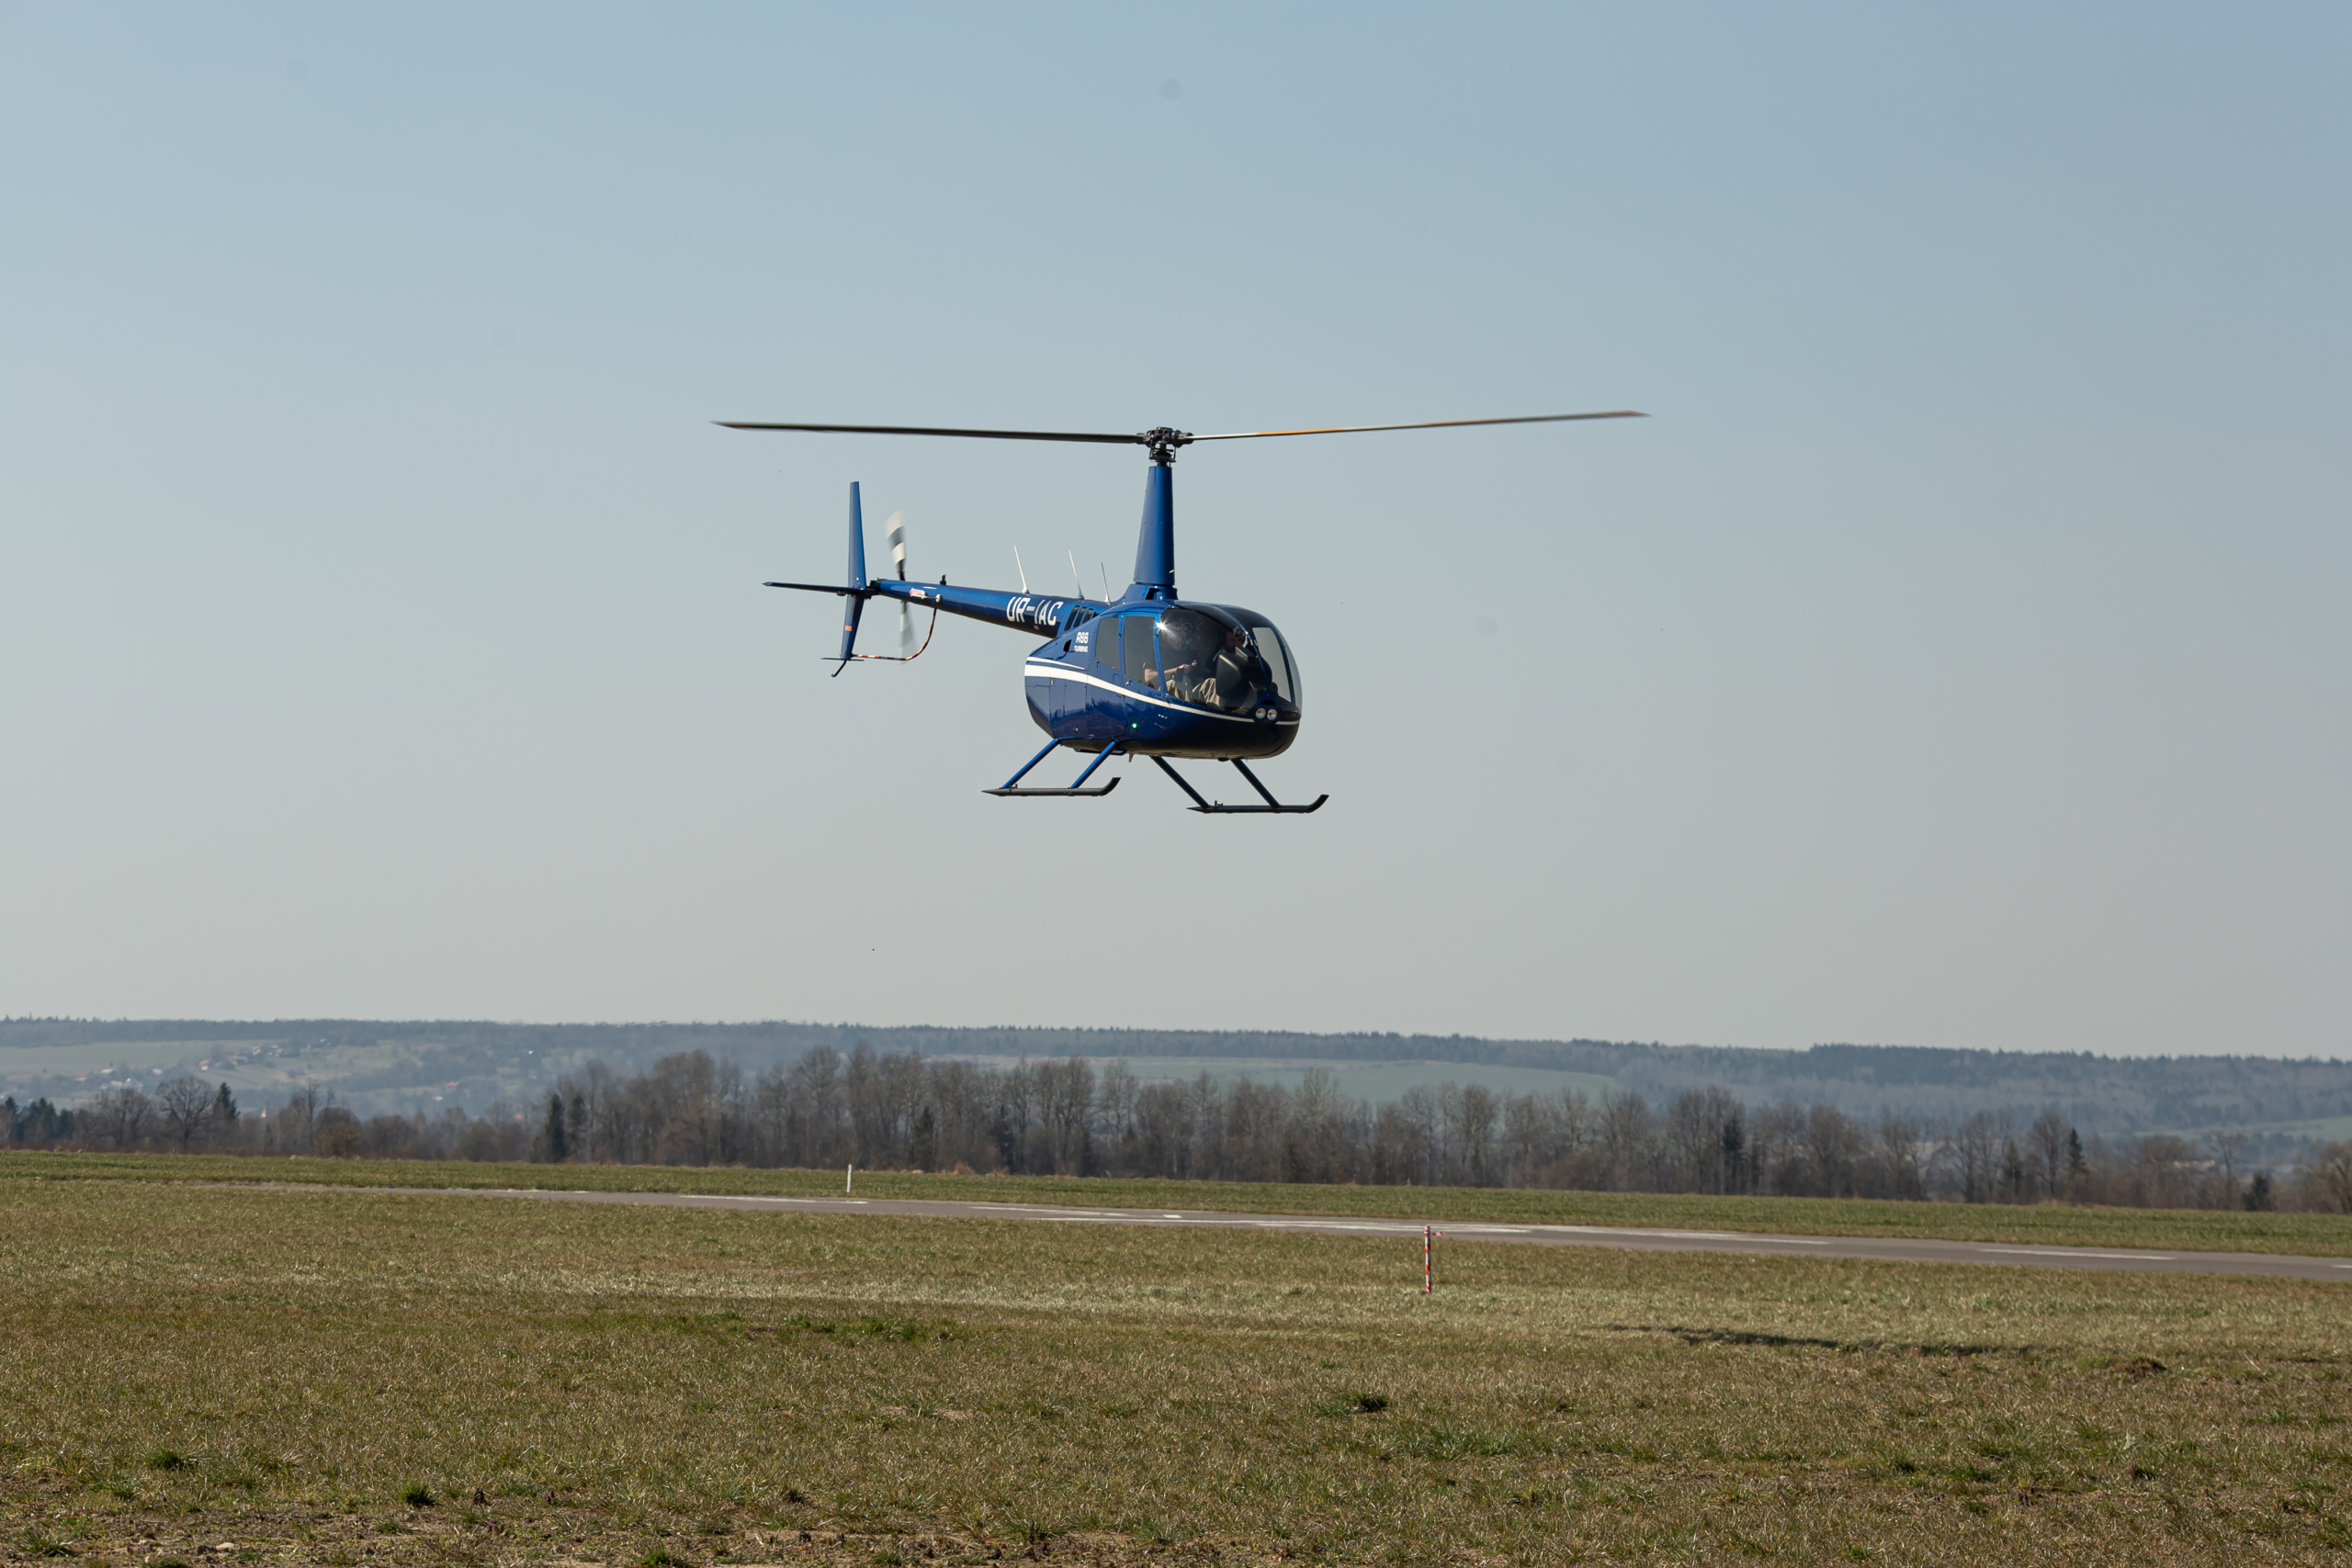 Політ над Говерлою на вертольоті Robinson R44